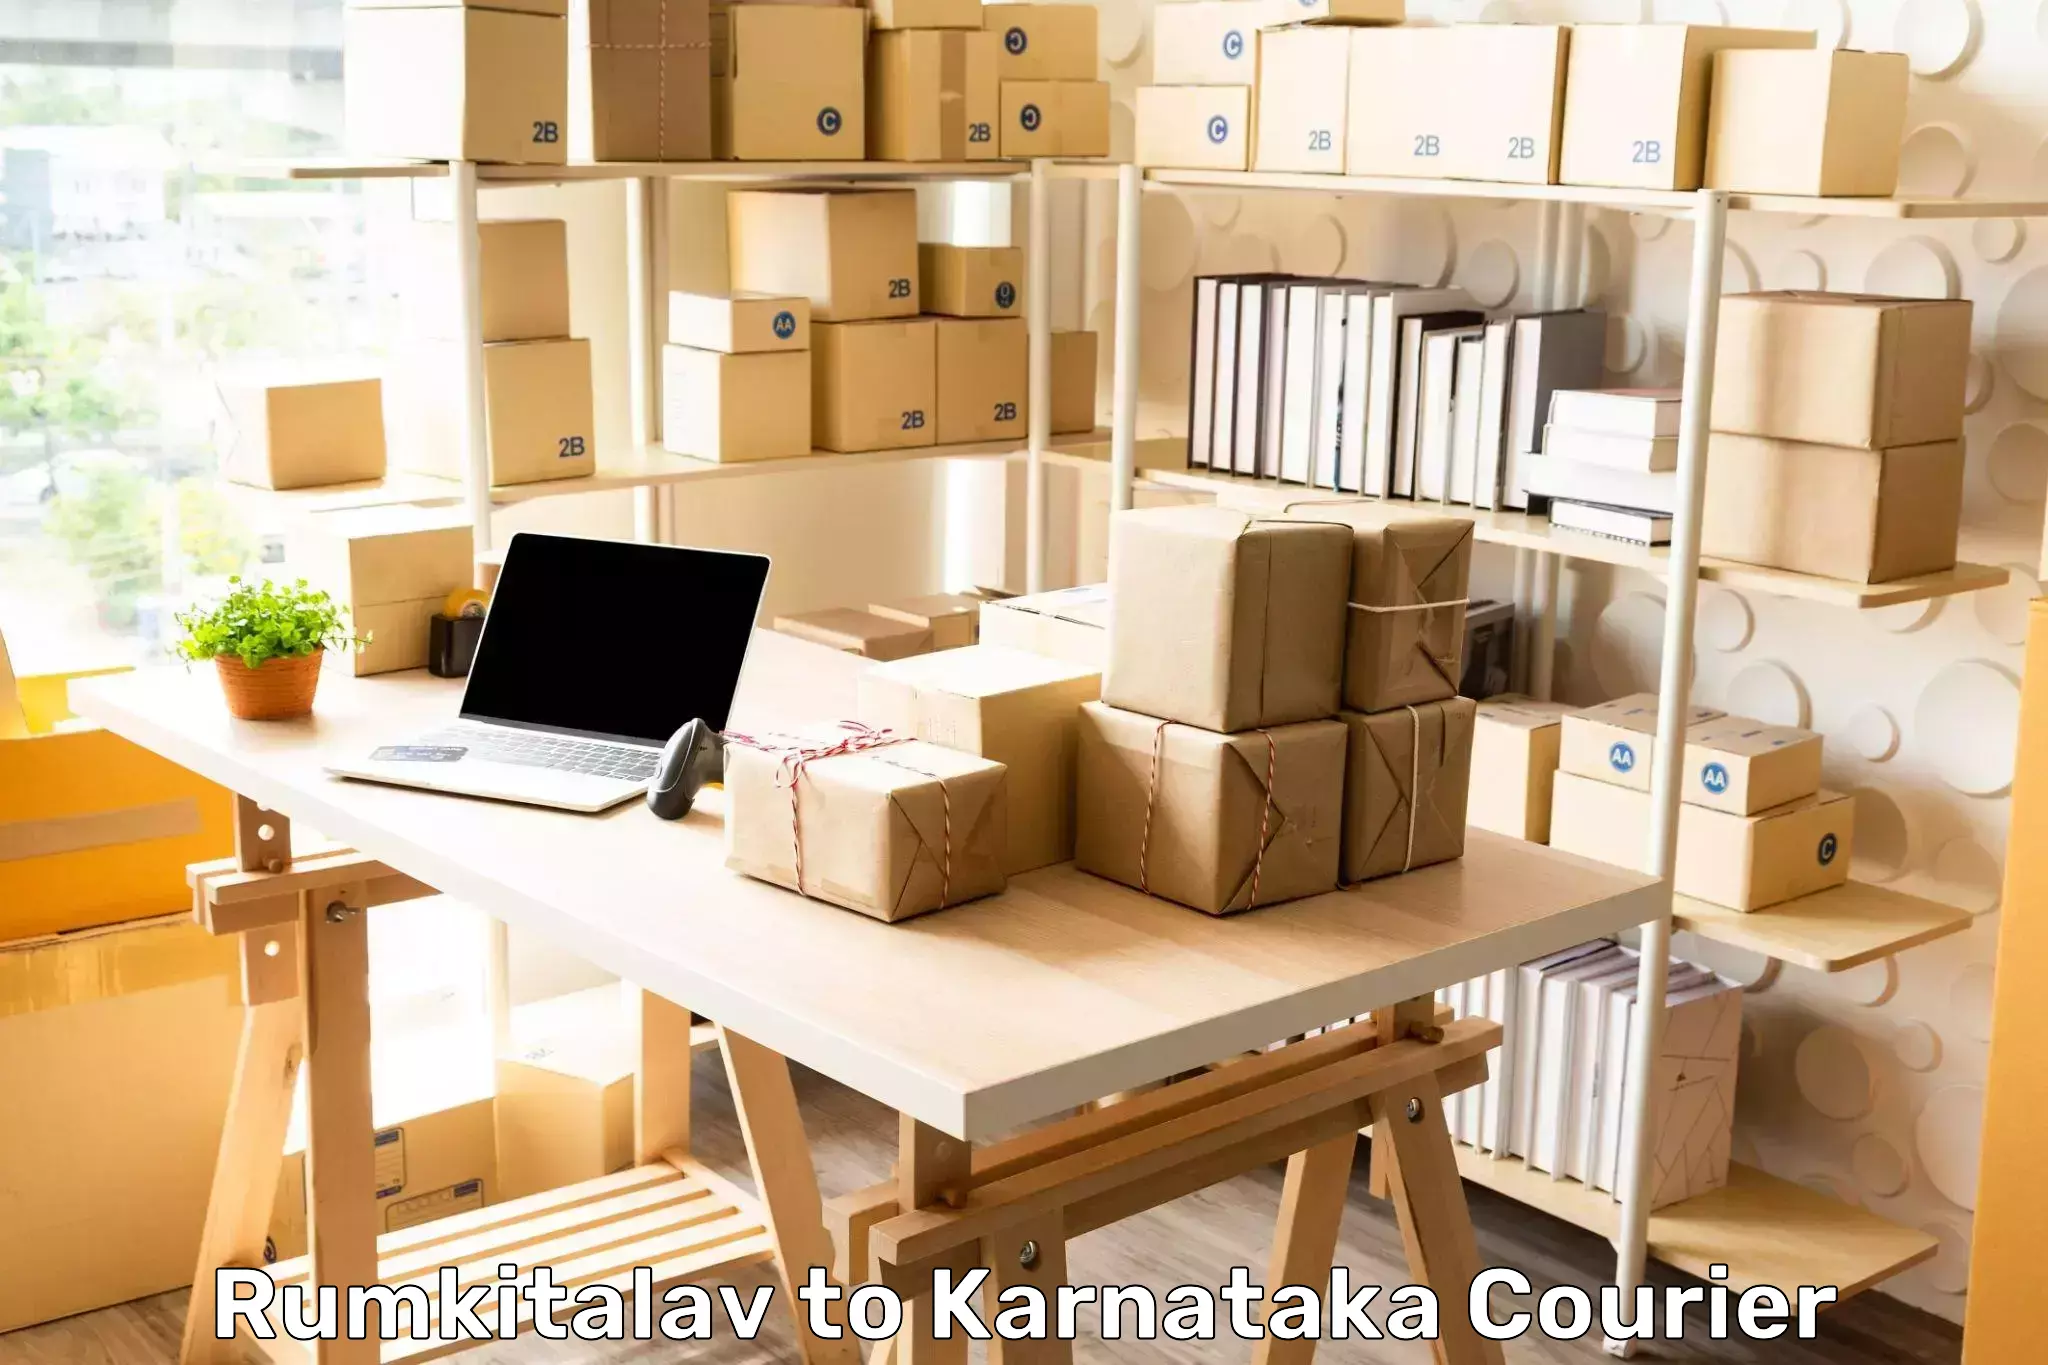 24-hour delivery options Rumkitalav to Yenepoya Mangalore